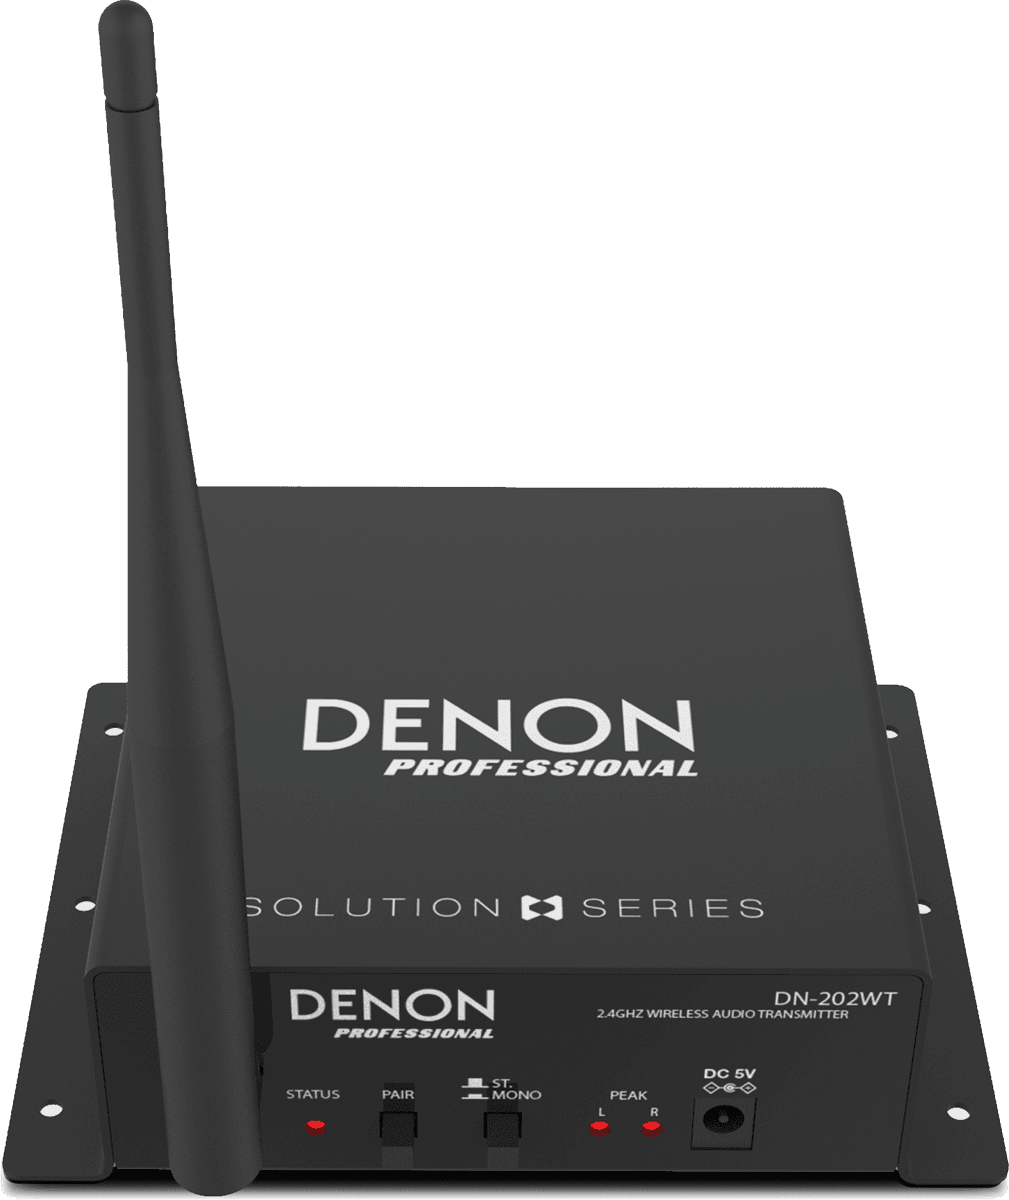 Denon Pro Dn202wt - Transmisor inalámbrico - Main picture